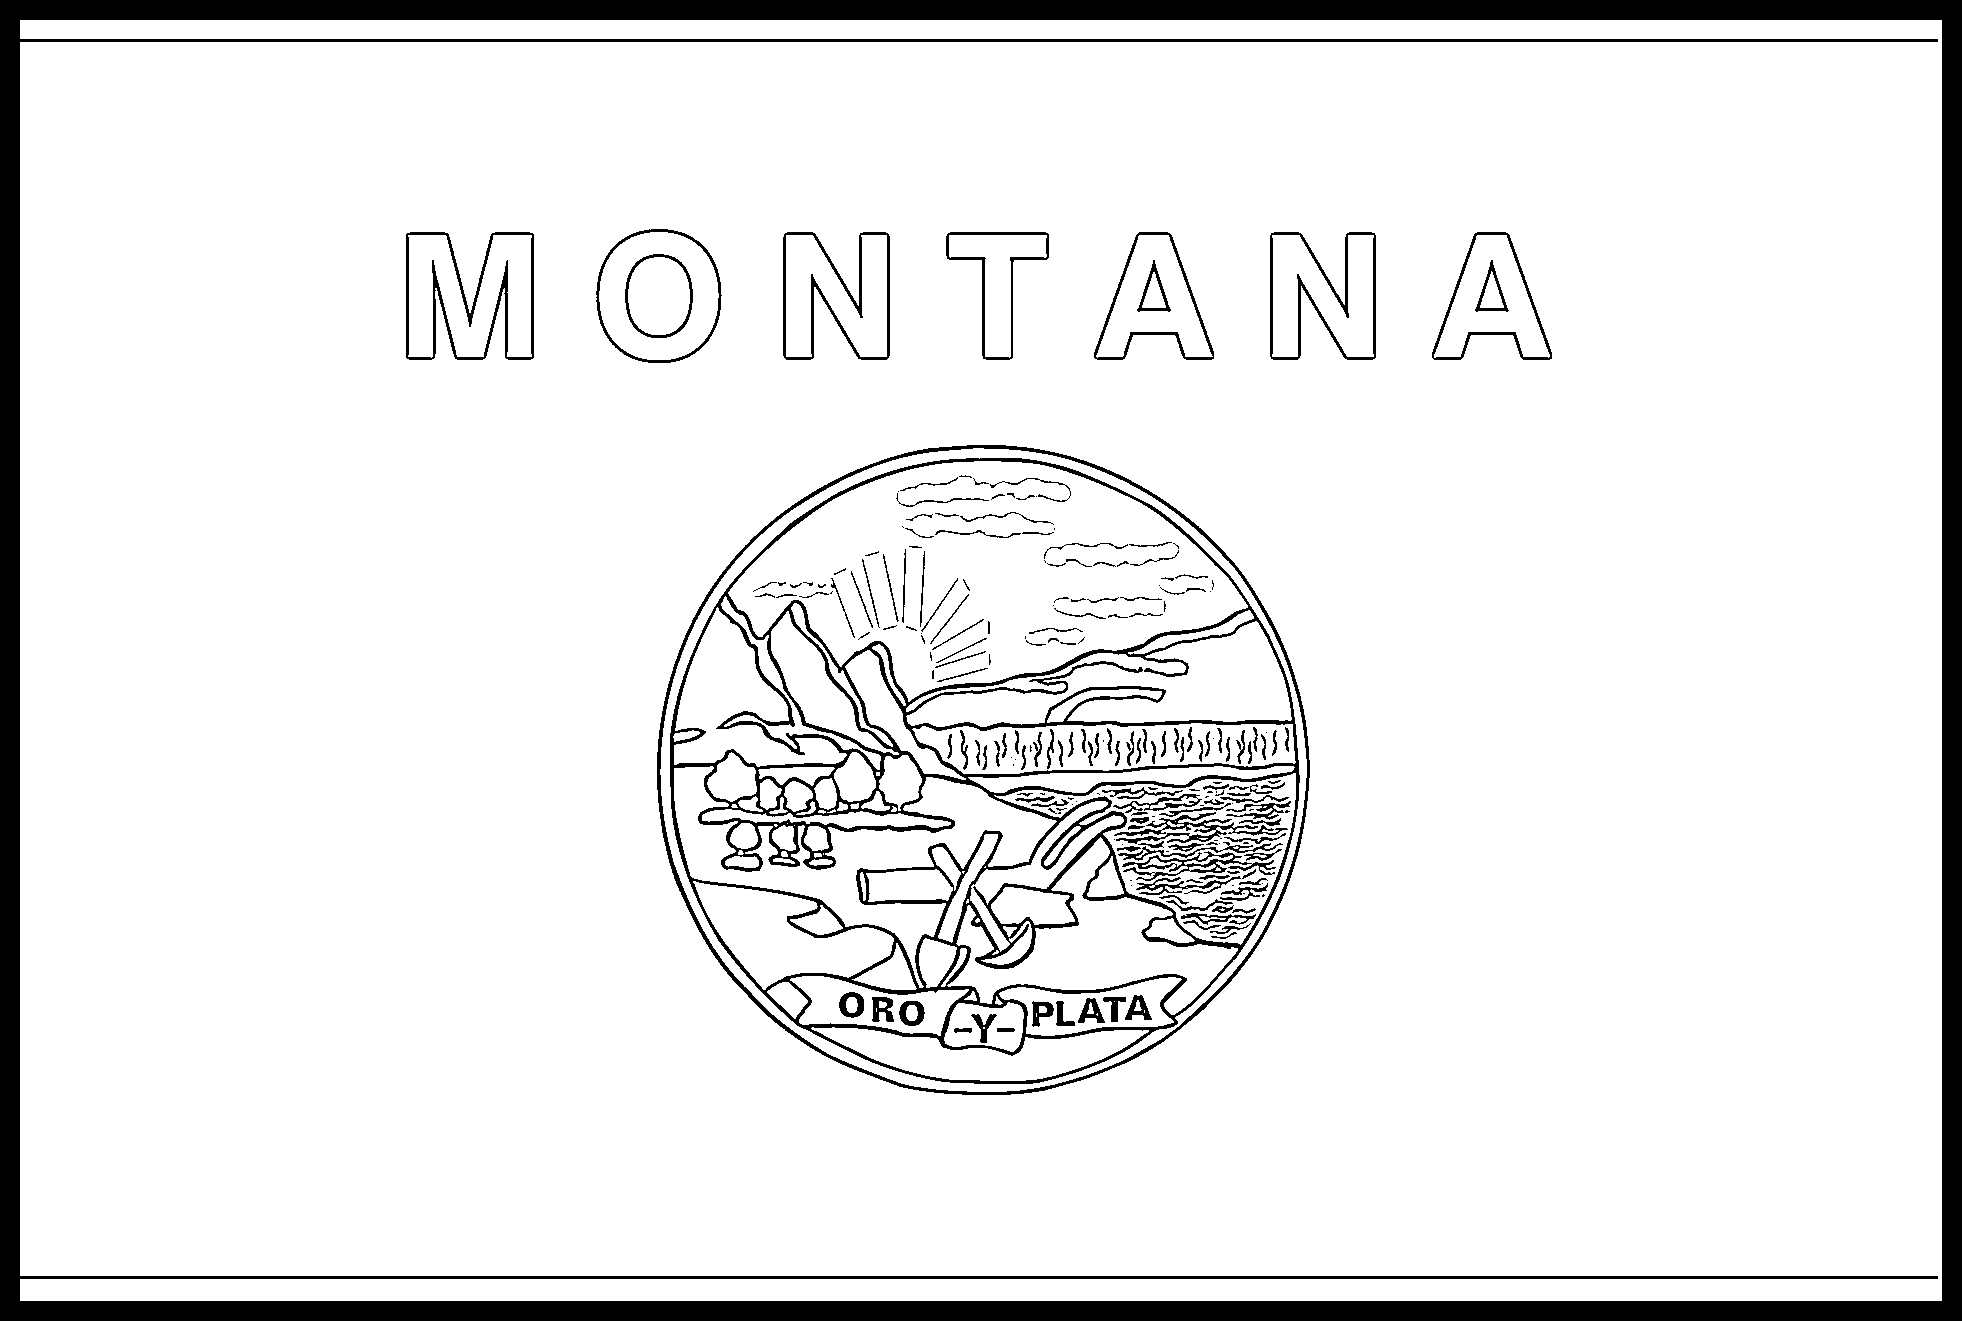 Montana Flag Coloring Page